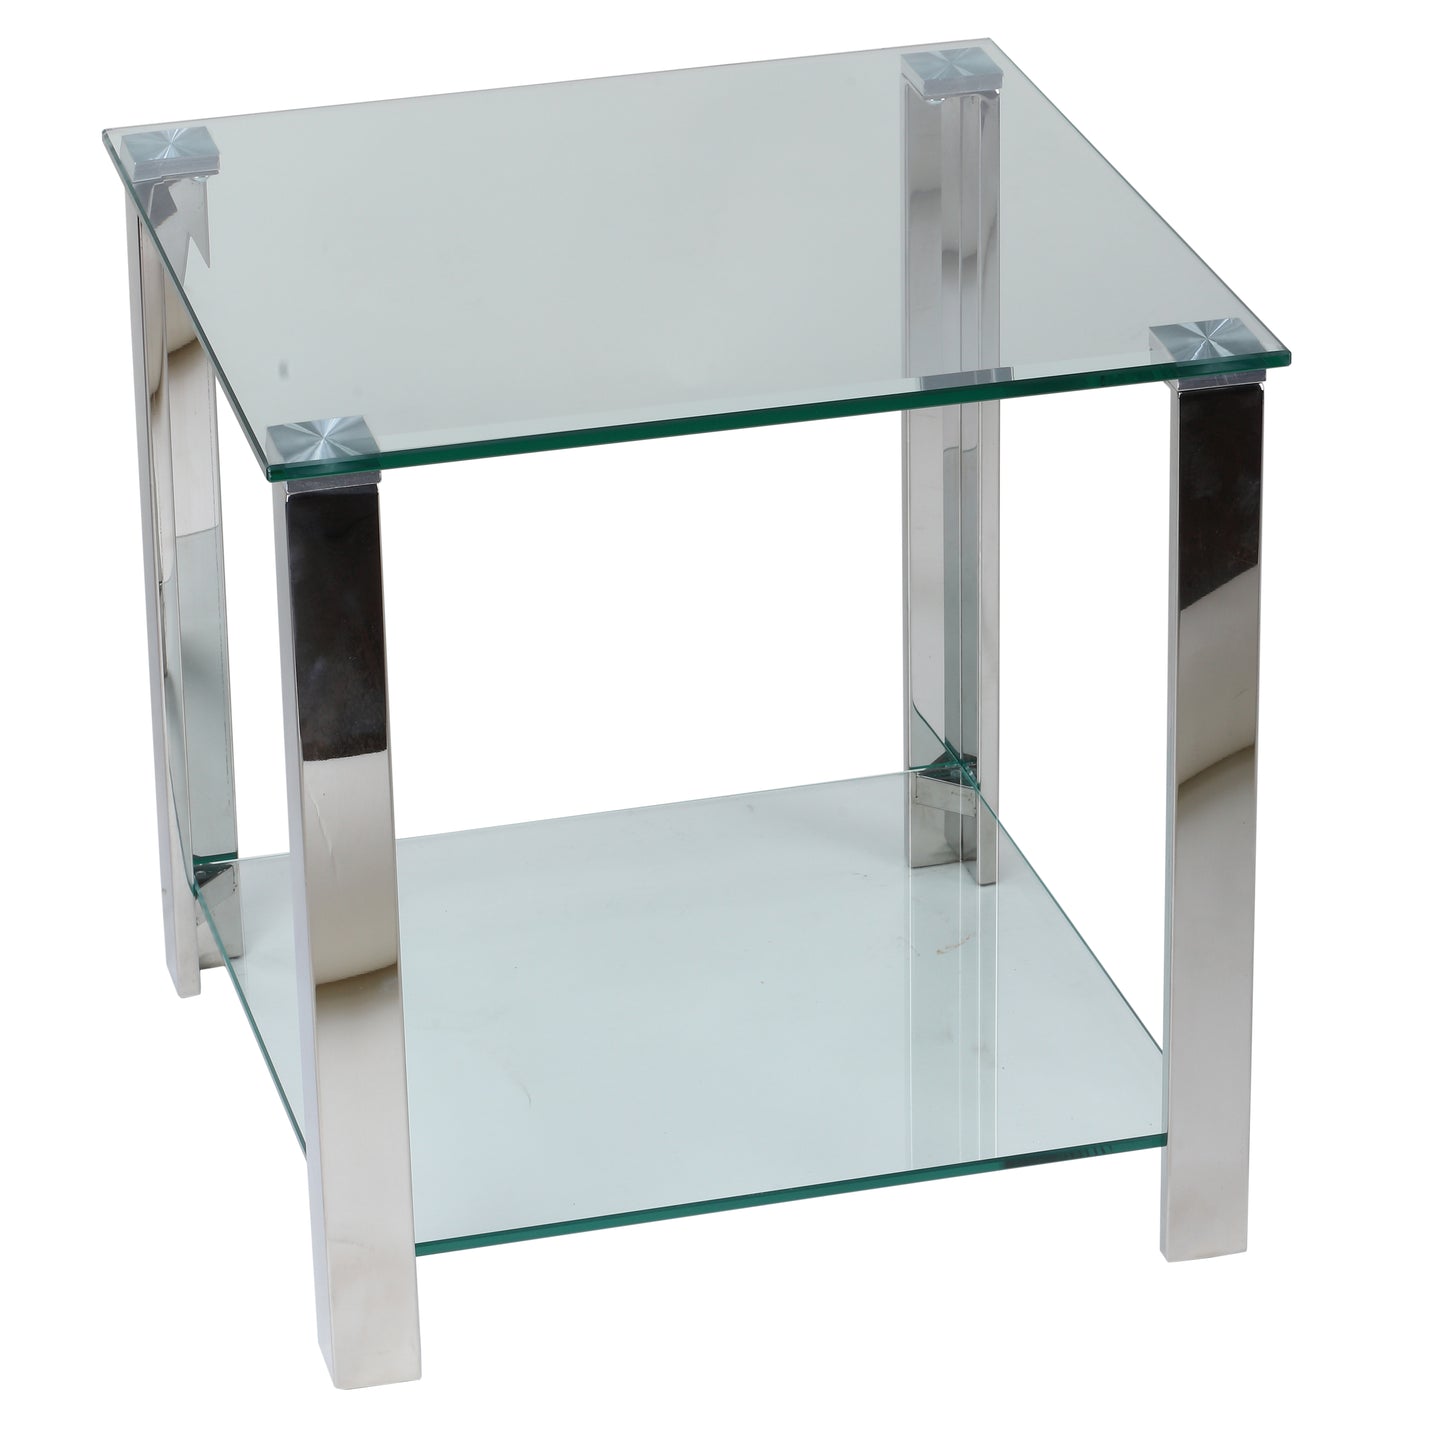 Cortesi Home Melissa Double Shelf Glass End Table, 20